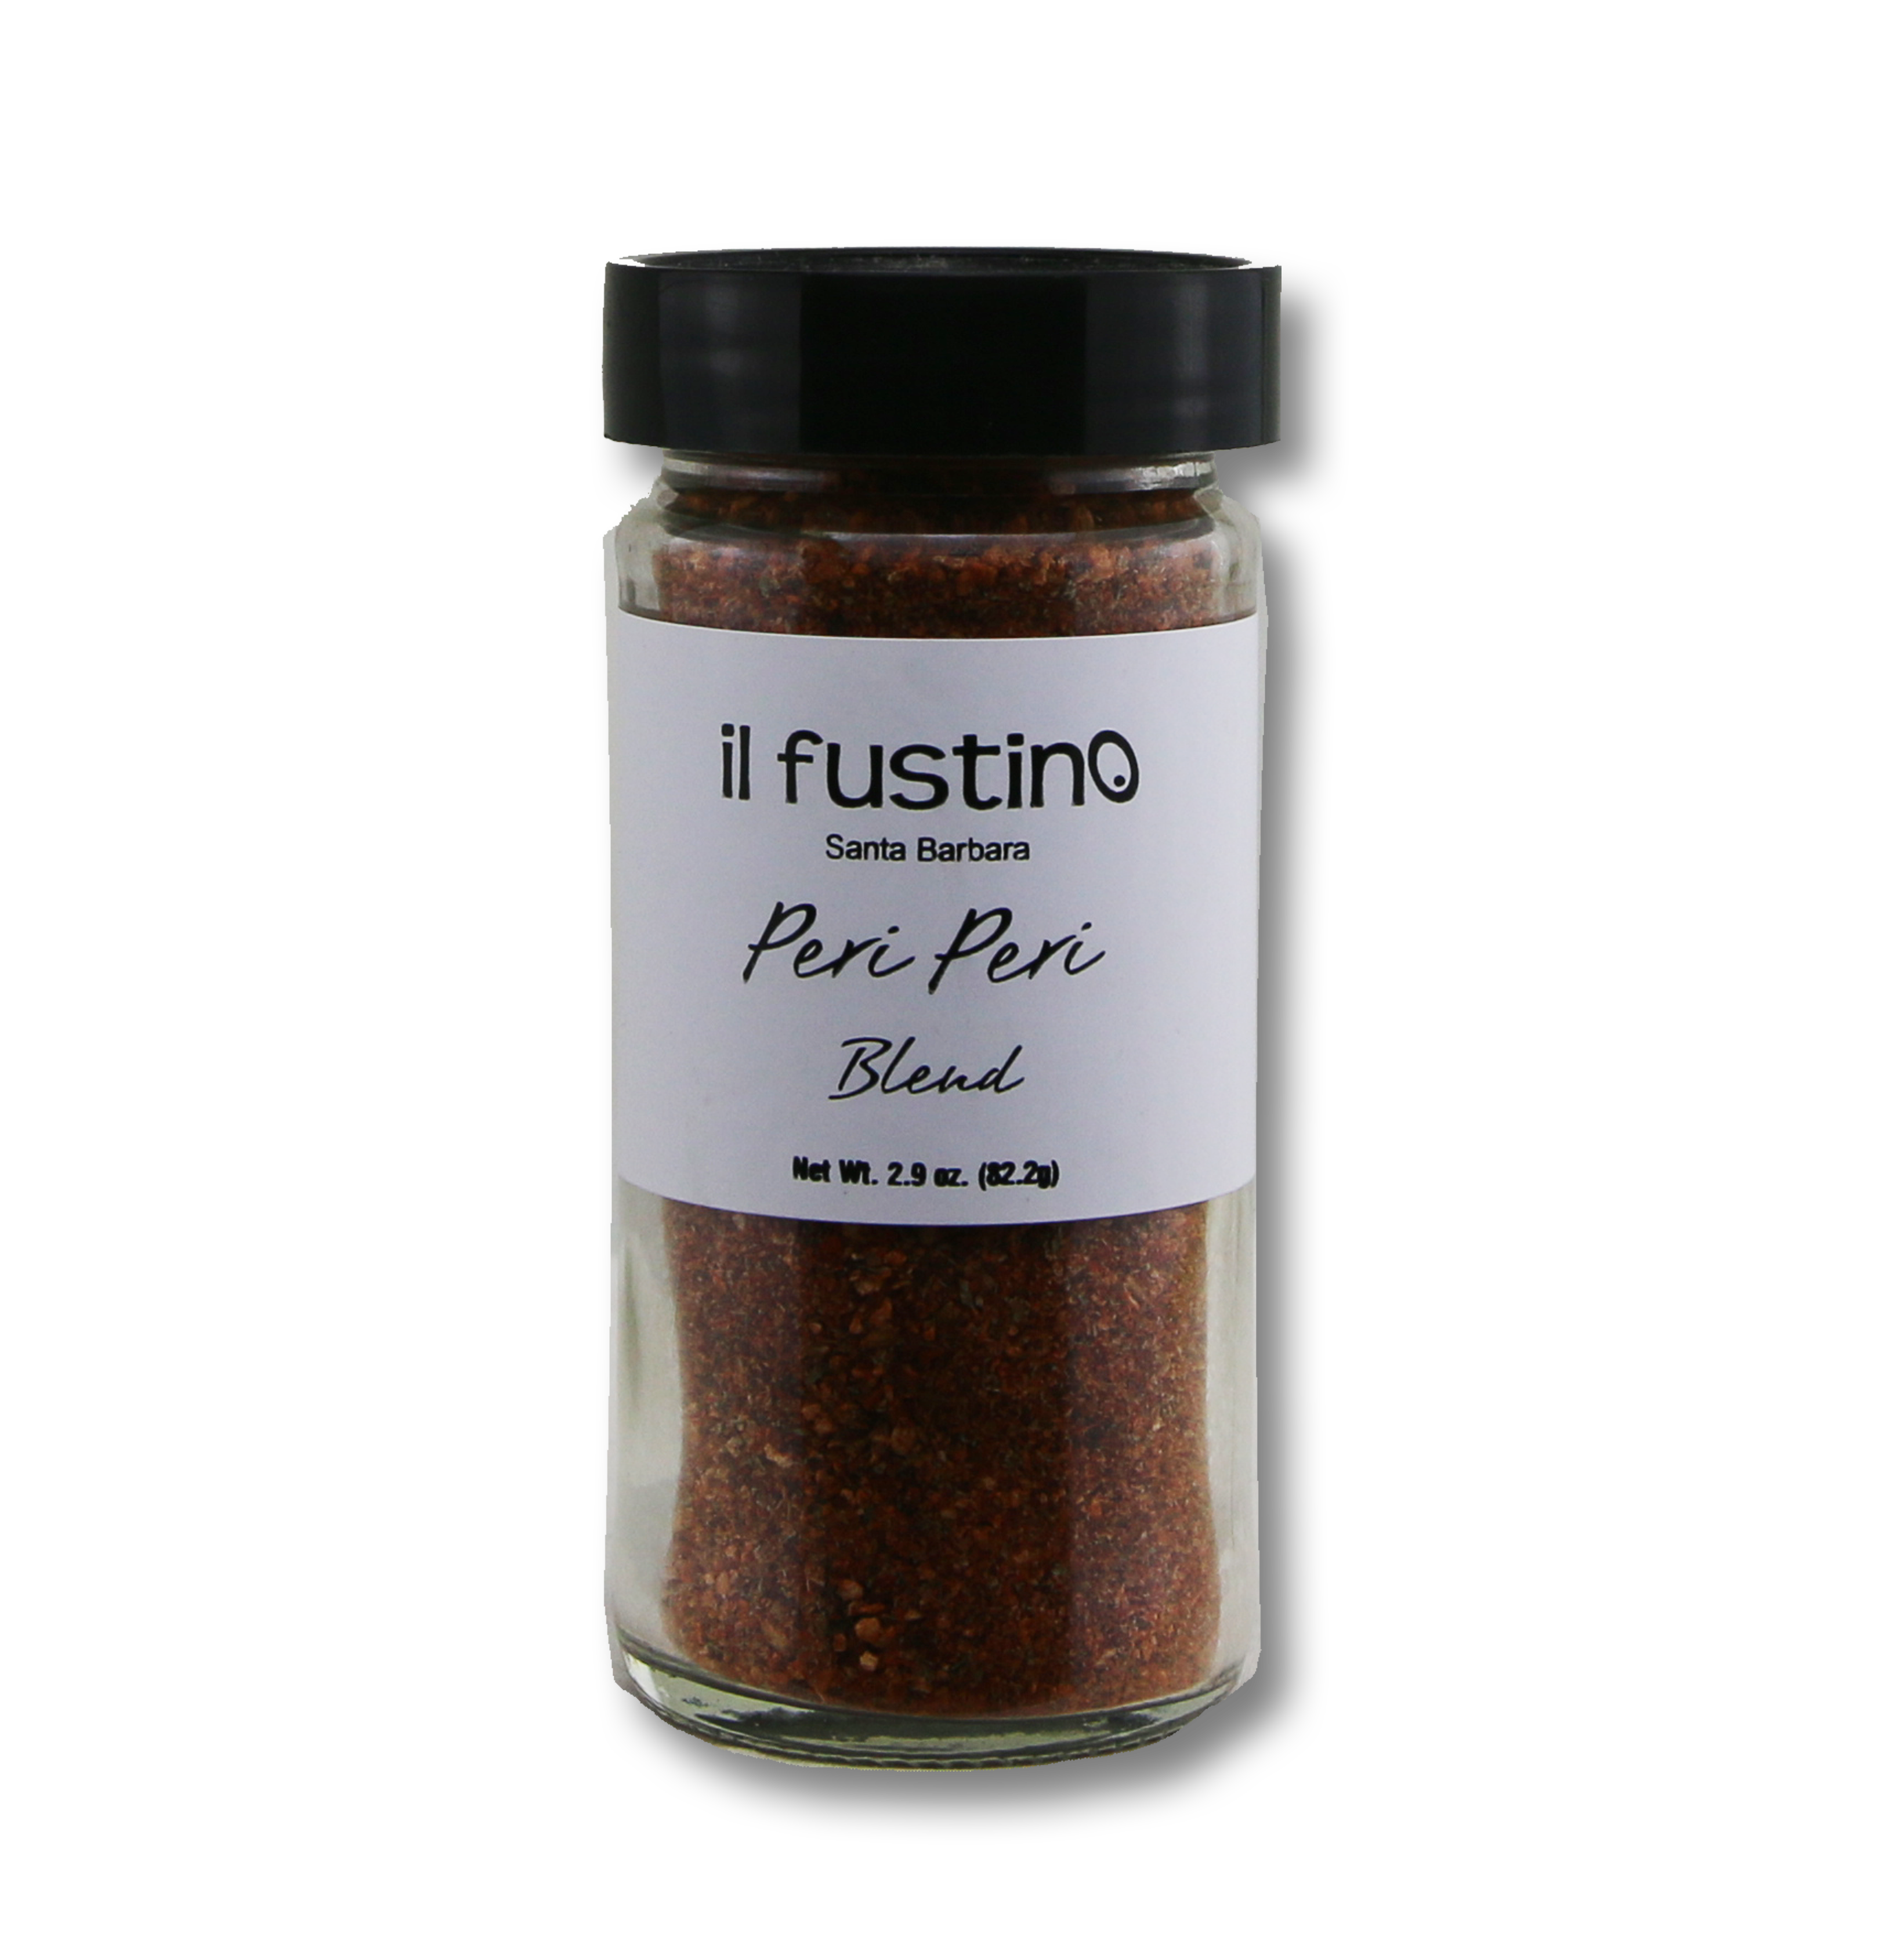 Peri Peri Salt & Vinegar Seasoning